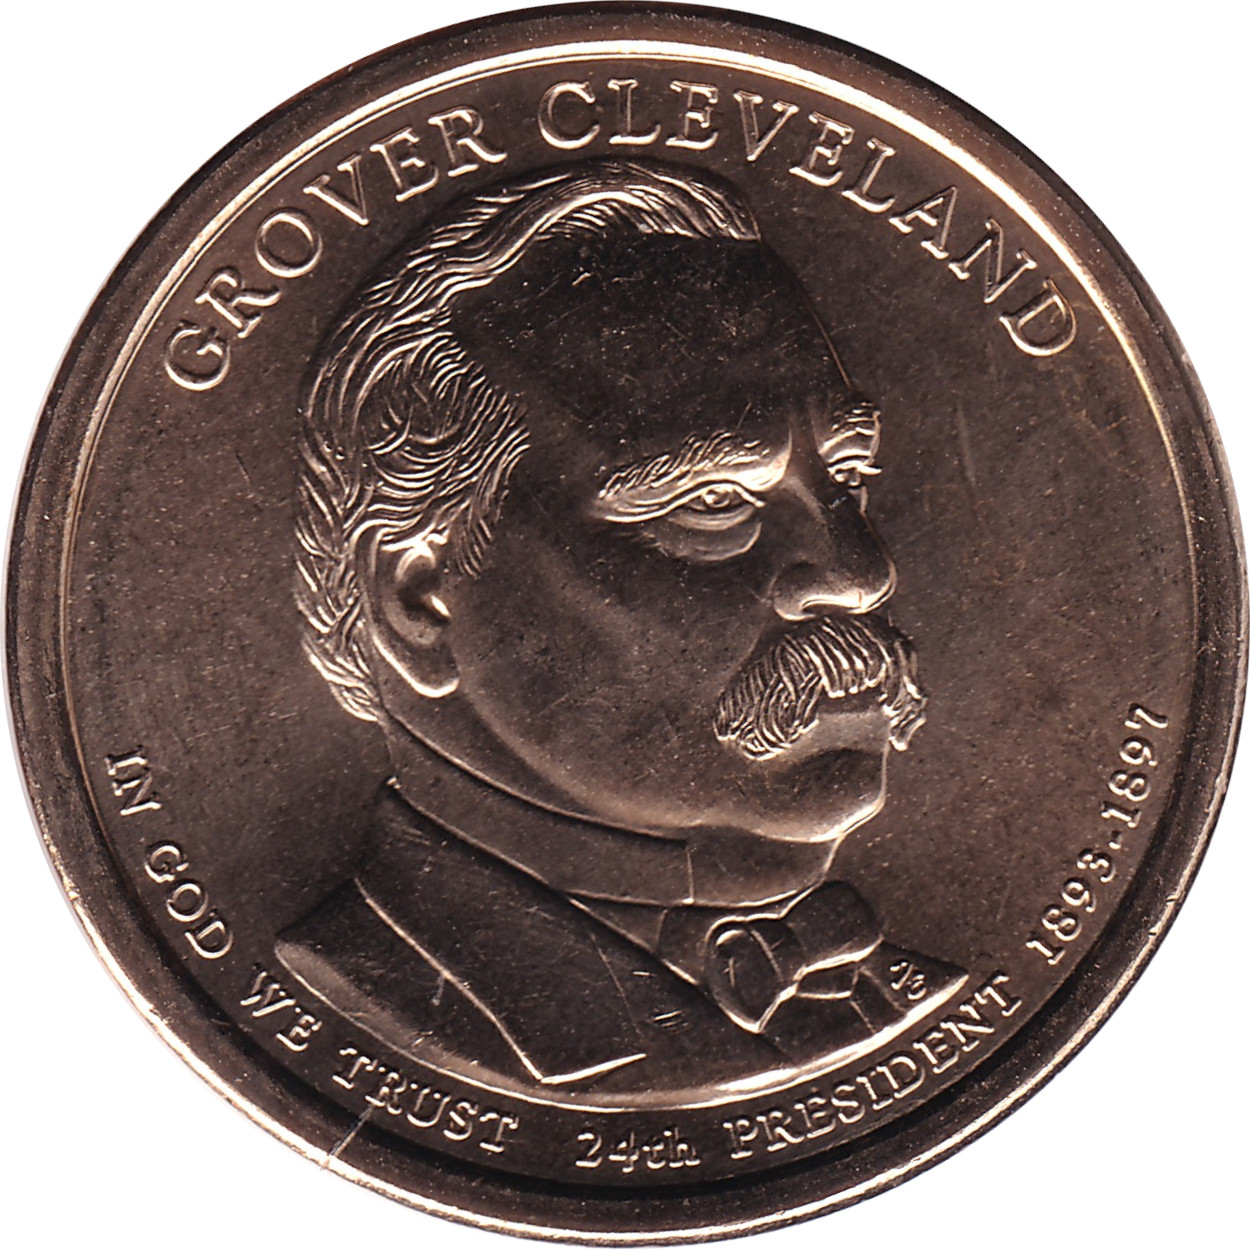 1 dollar - Grover Cleveland - First mandate